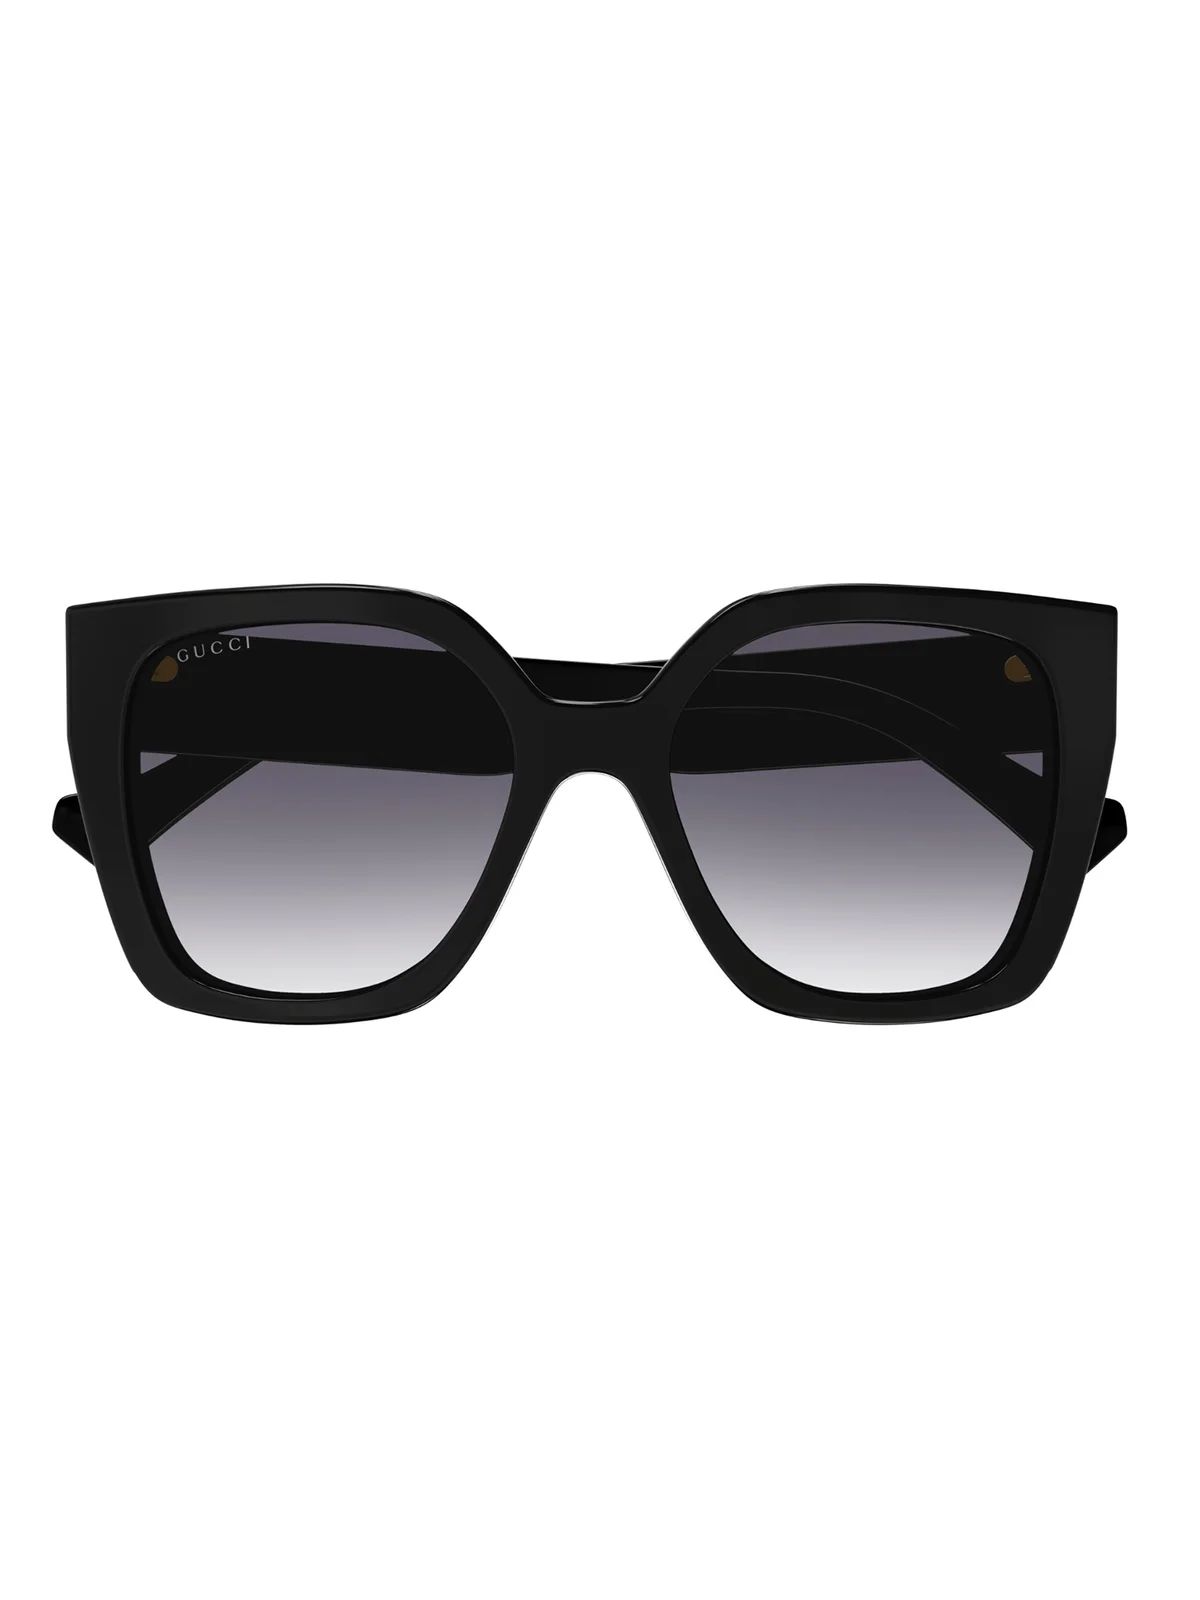 Gucci Eyewear	Butterfly Frame Sunglasses | Cettire Global